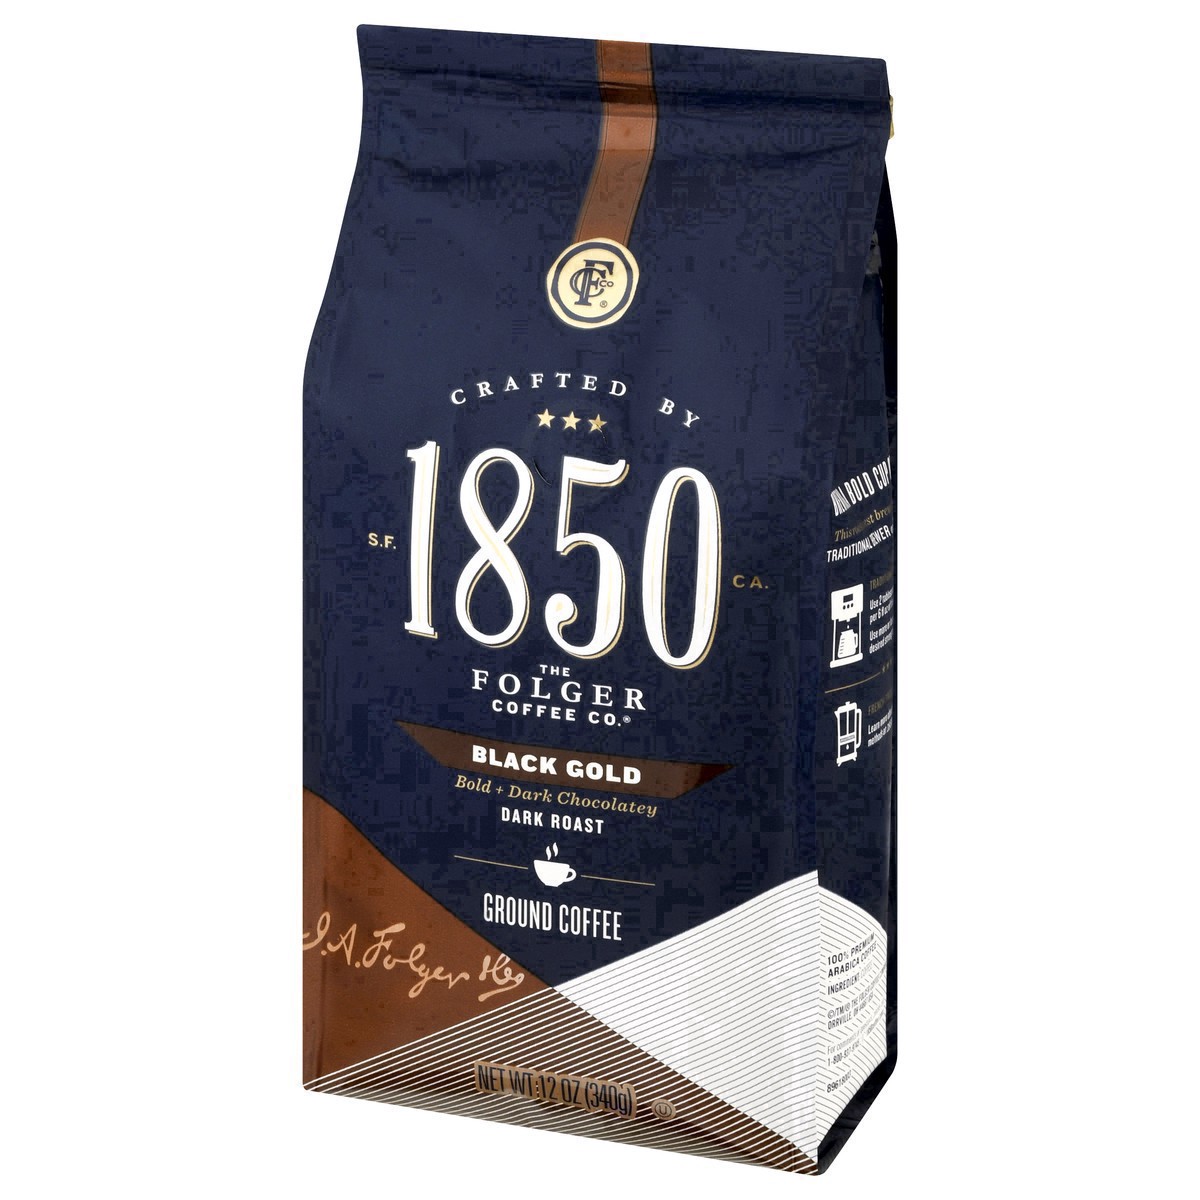 slide 22 of 31, 1850 Black Gold Ground Coffee, 12 oz